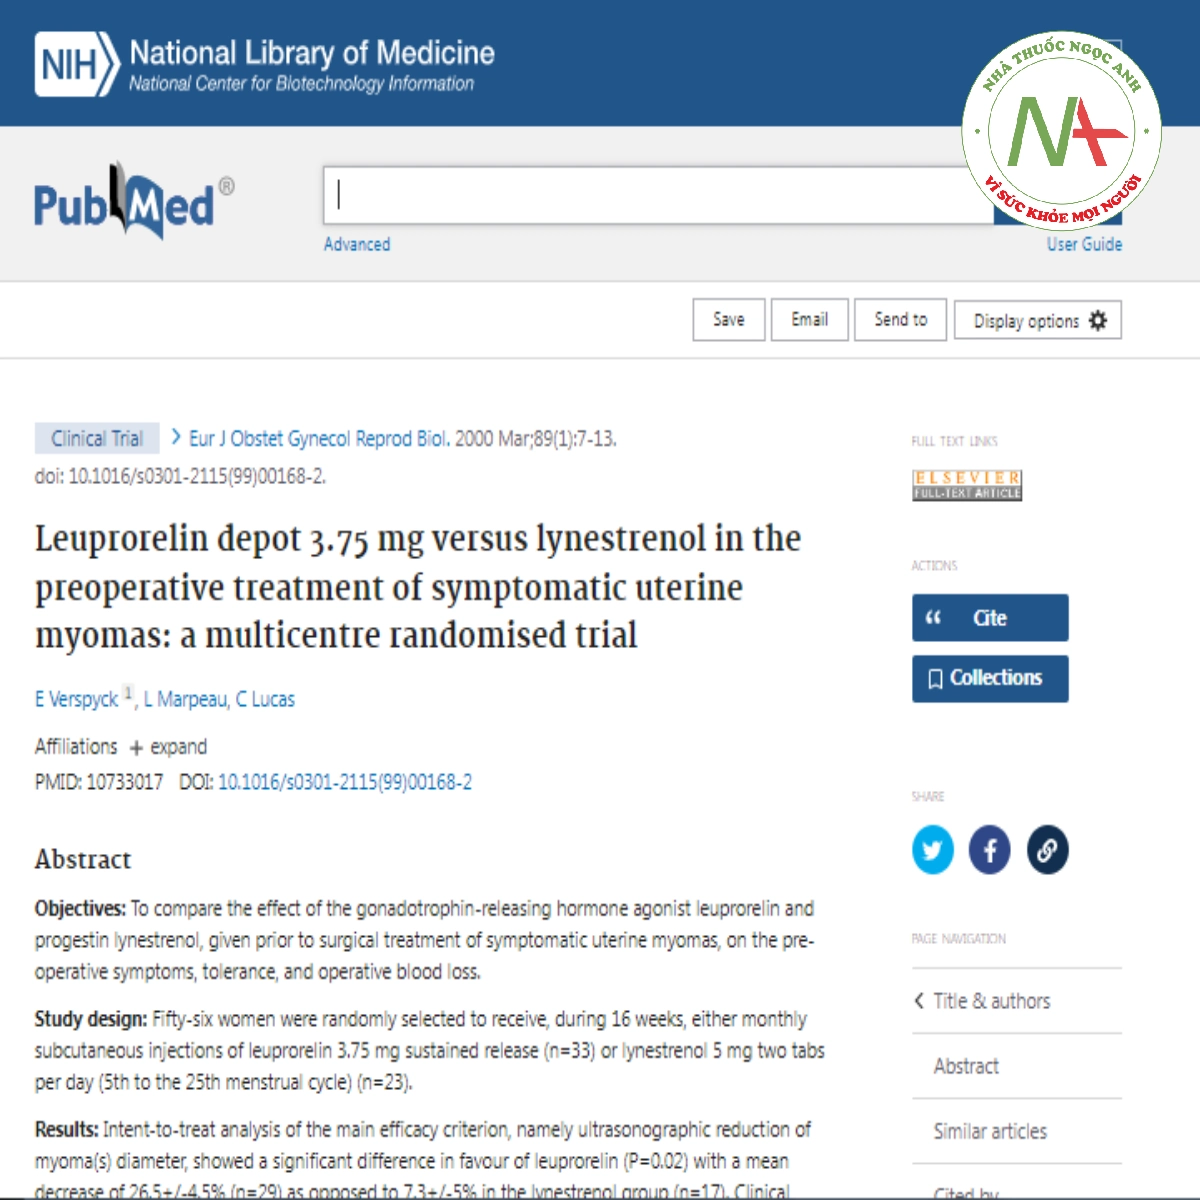 Leuprorelin depot 3.75 mg versus lynestrenol in the preoperative treatment of symptomatic uterine myomas: a multicentre randomised trial